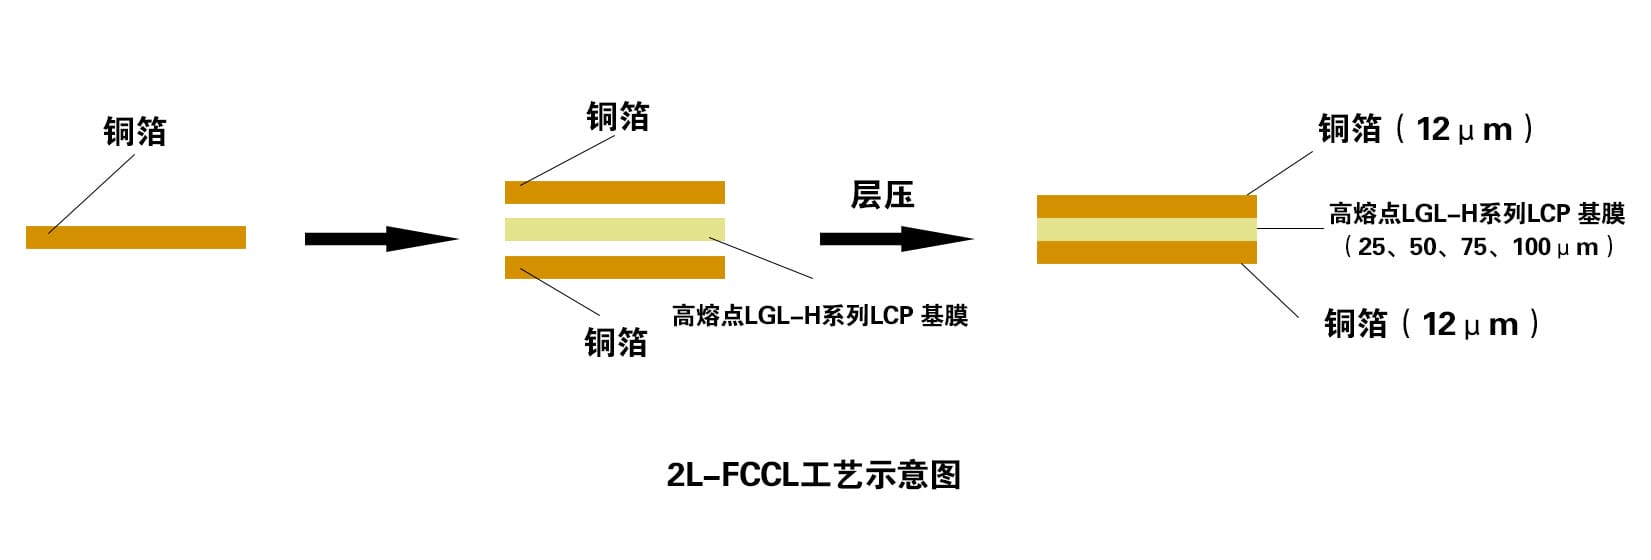 2L-FCCL工艺示意图